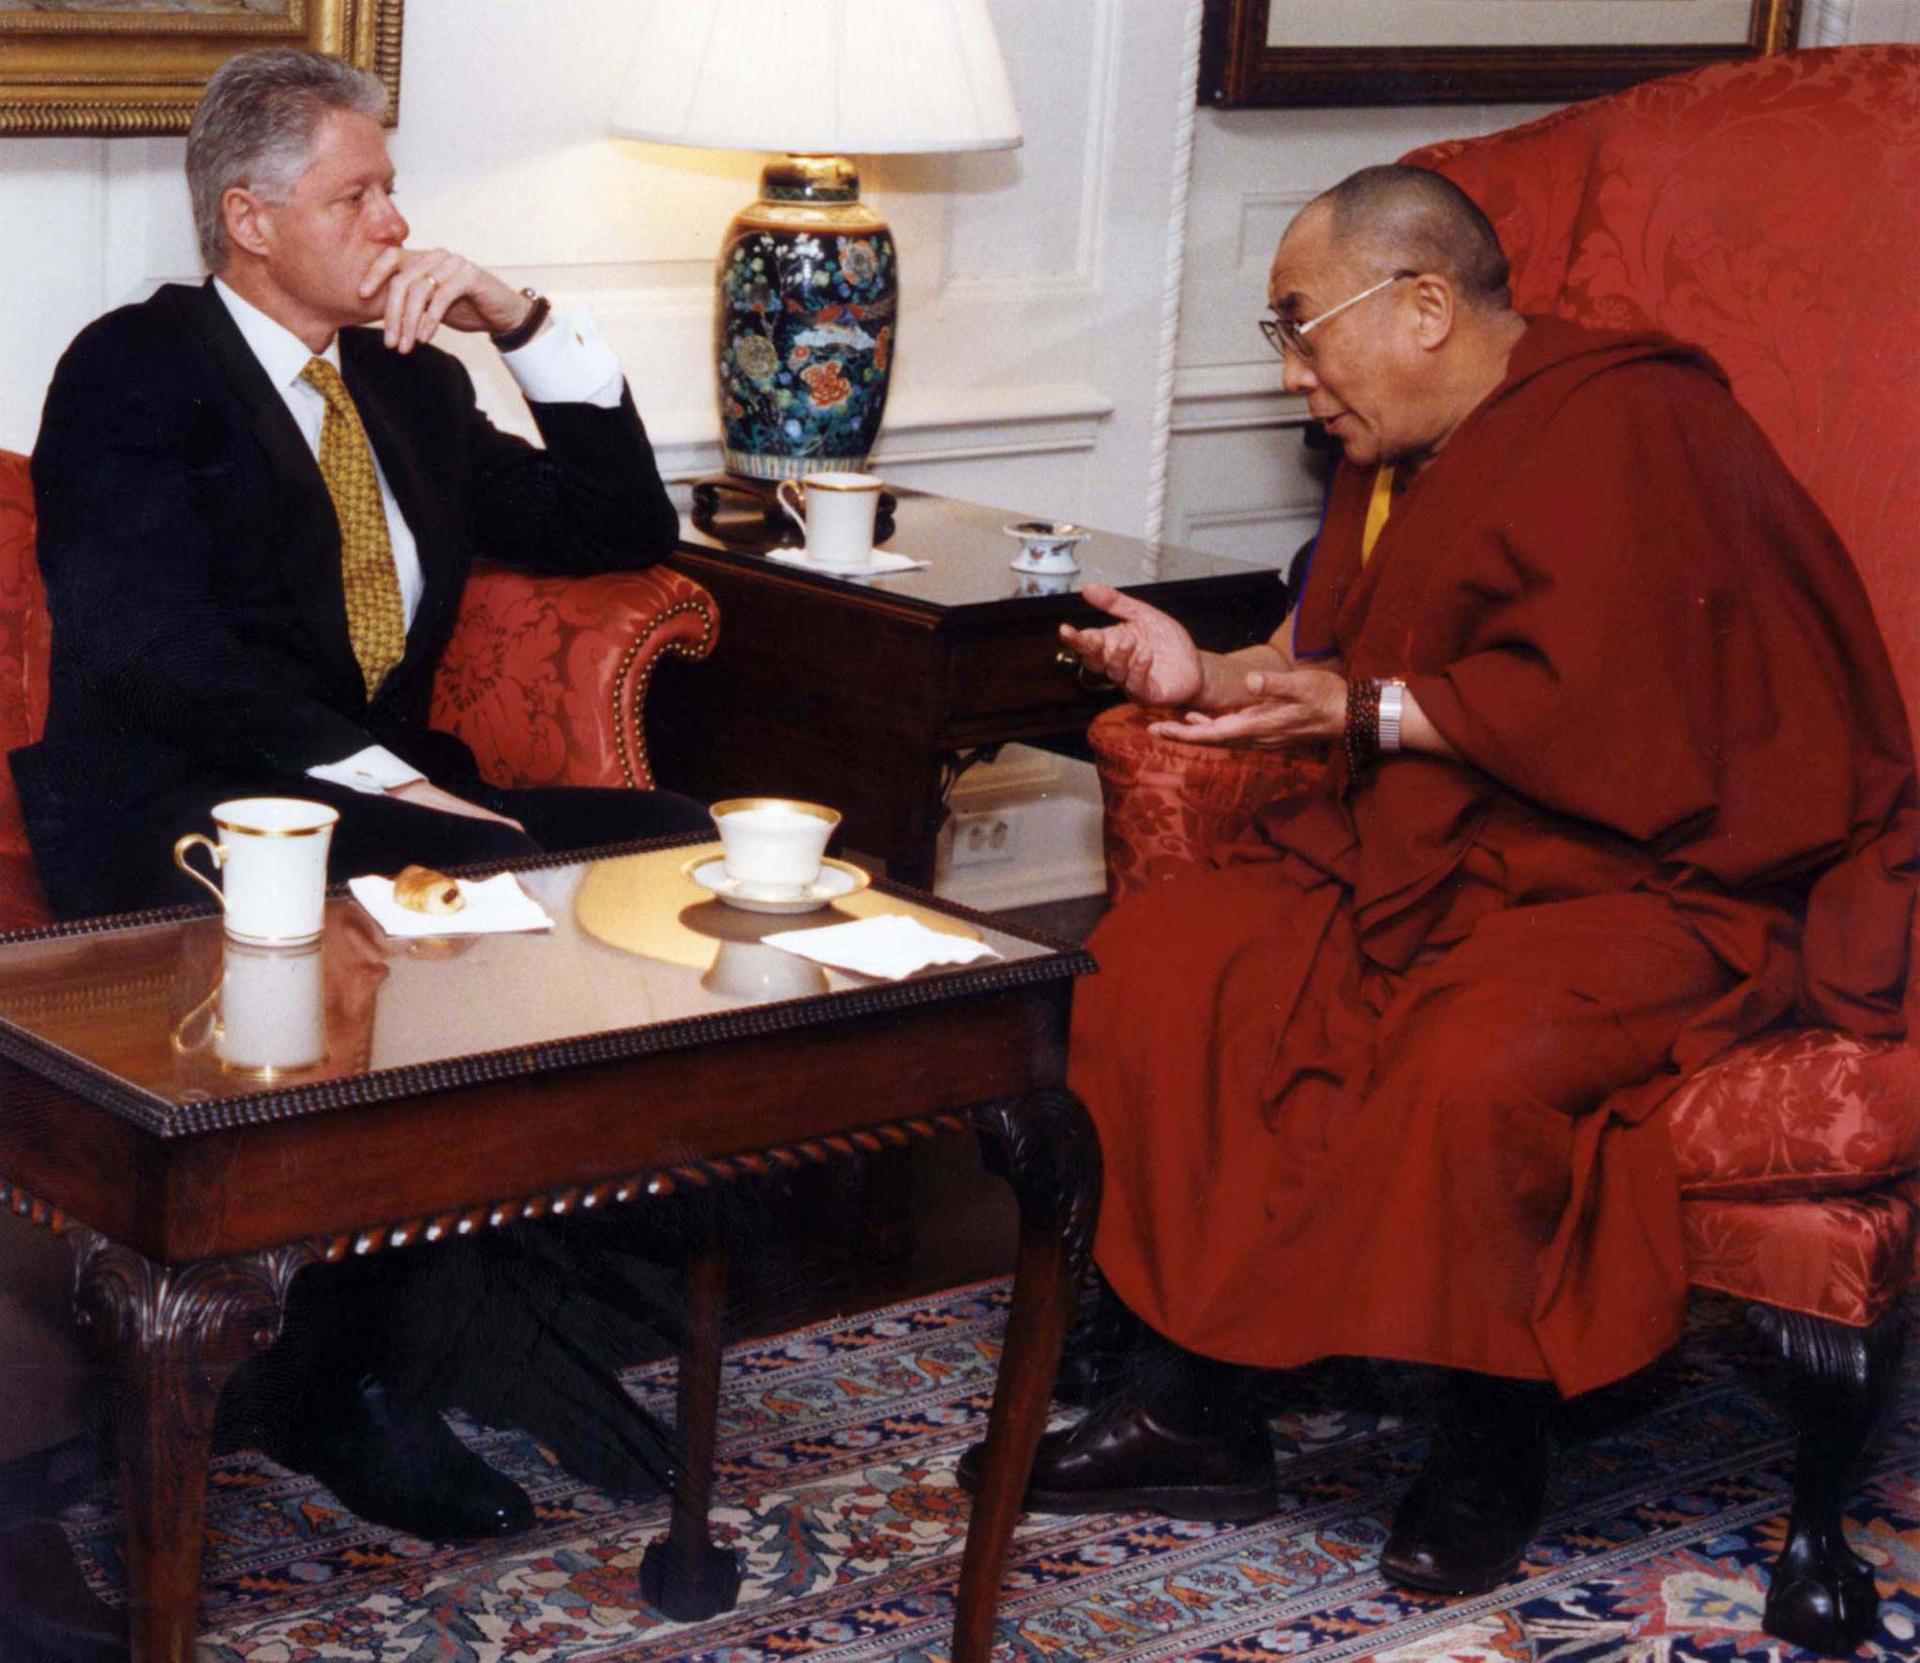 US President Bill Clinton meets with the Dalai Lama